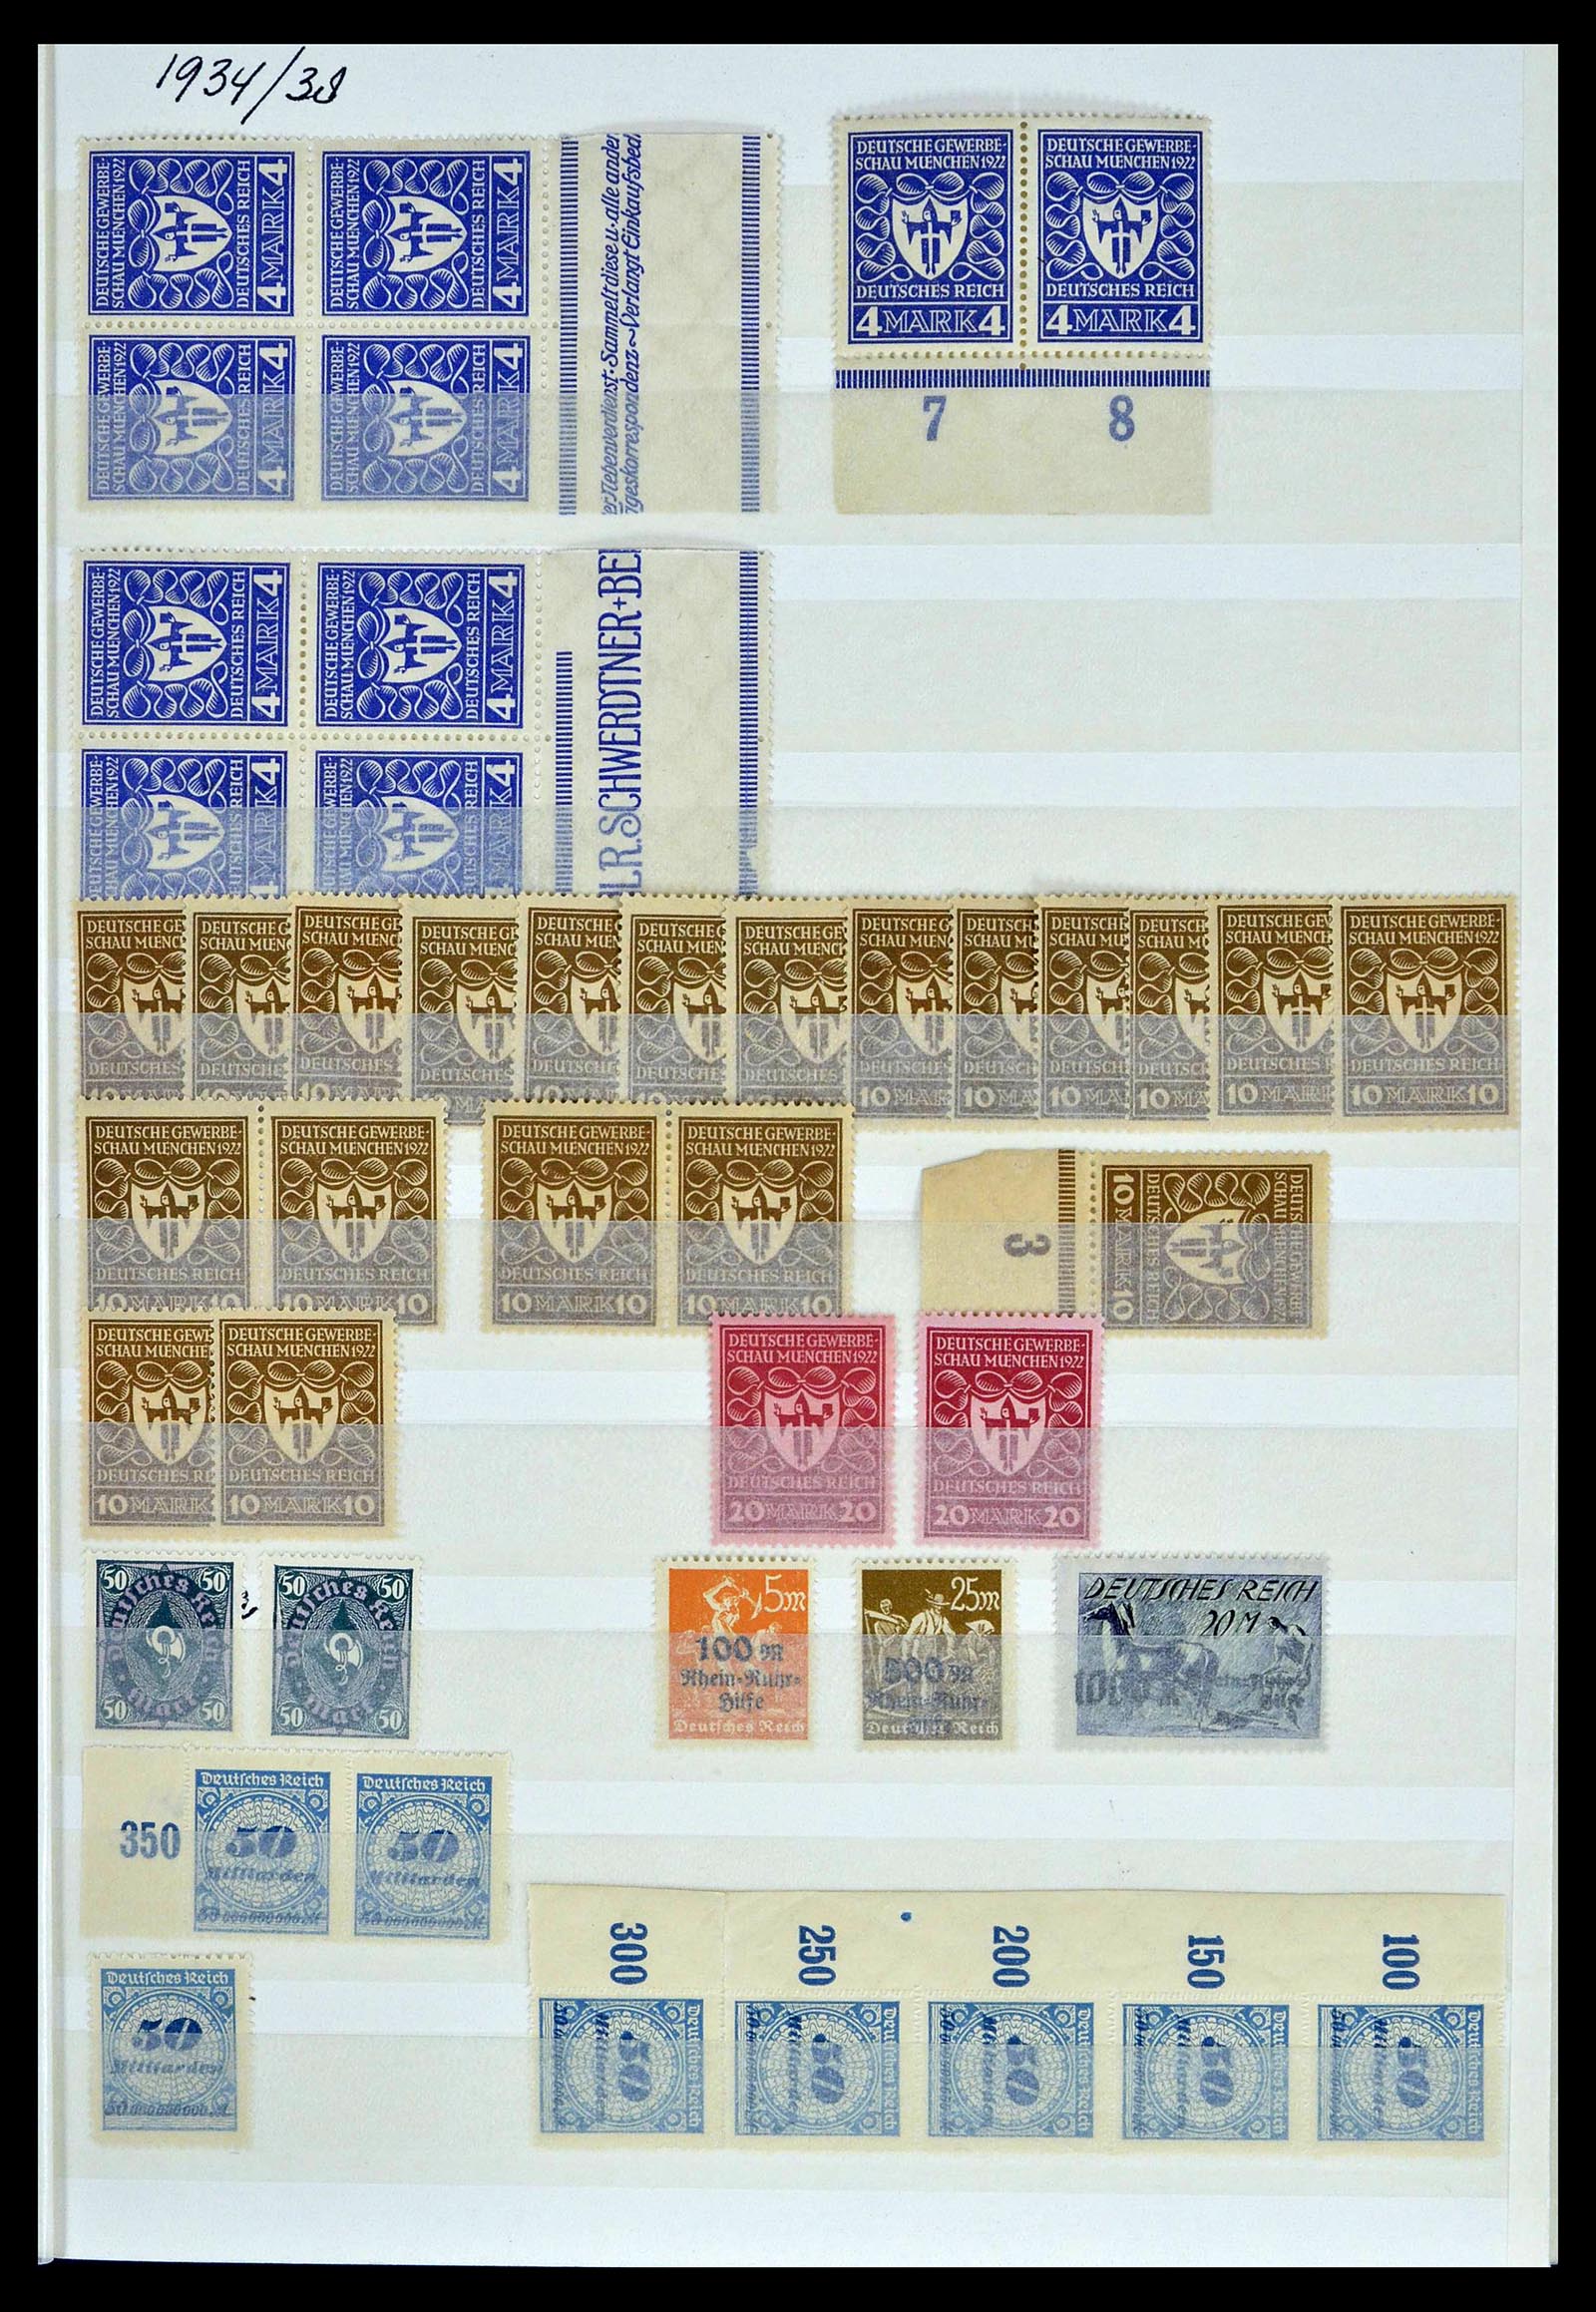 39256 0023 - Stamp collection 39256 German Reich MNH.